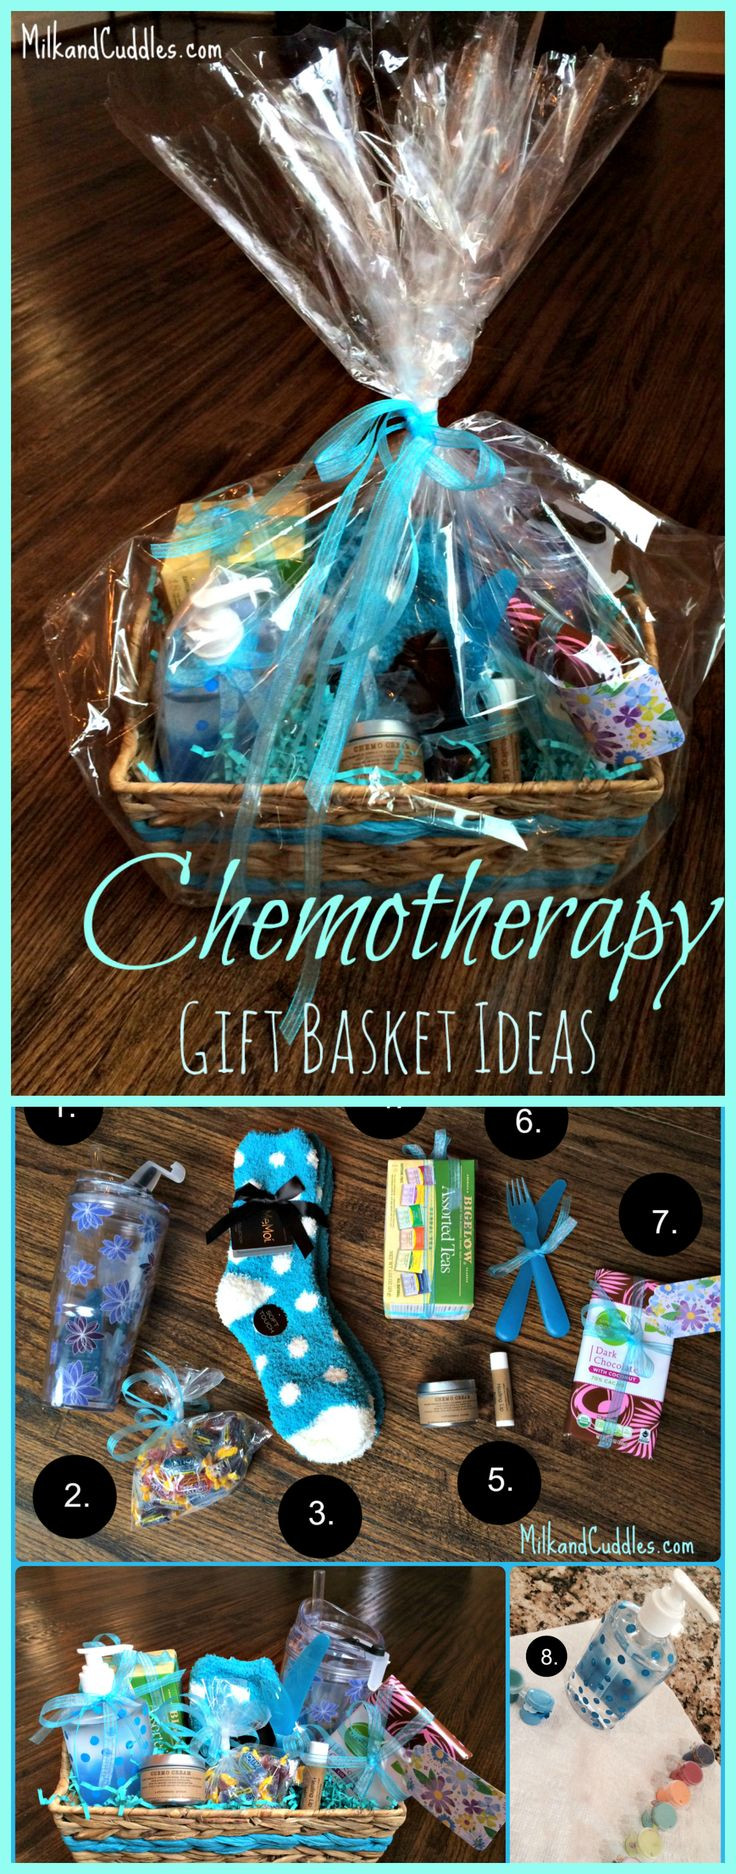 Gift Basket Ideas For Cancer Patients
 468 best Gift Baskets images on Pinterest